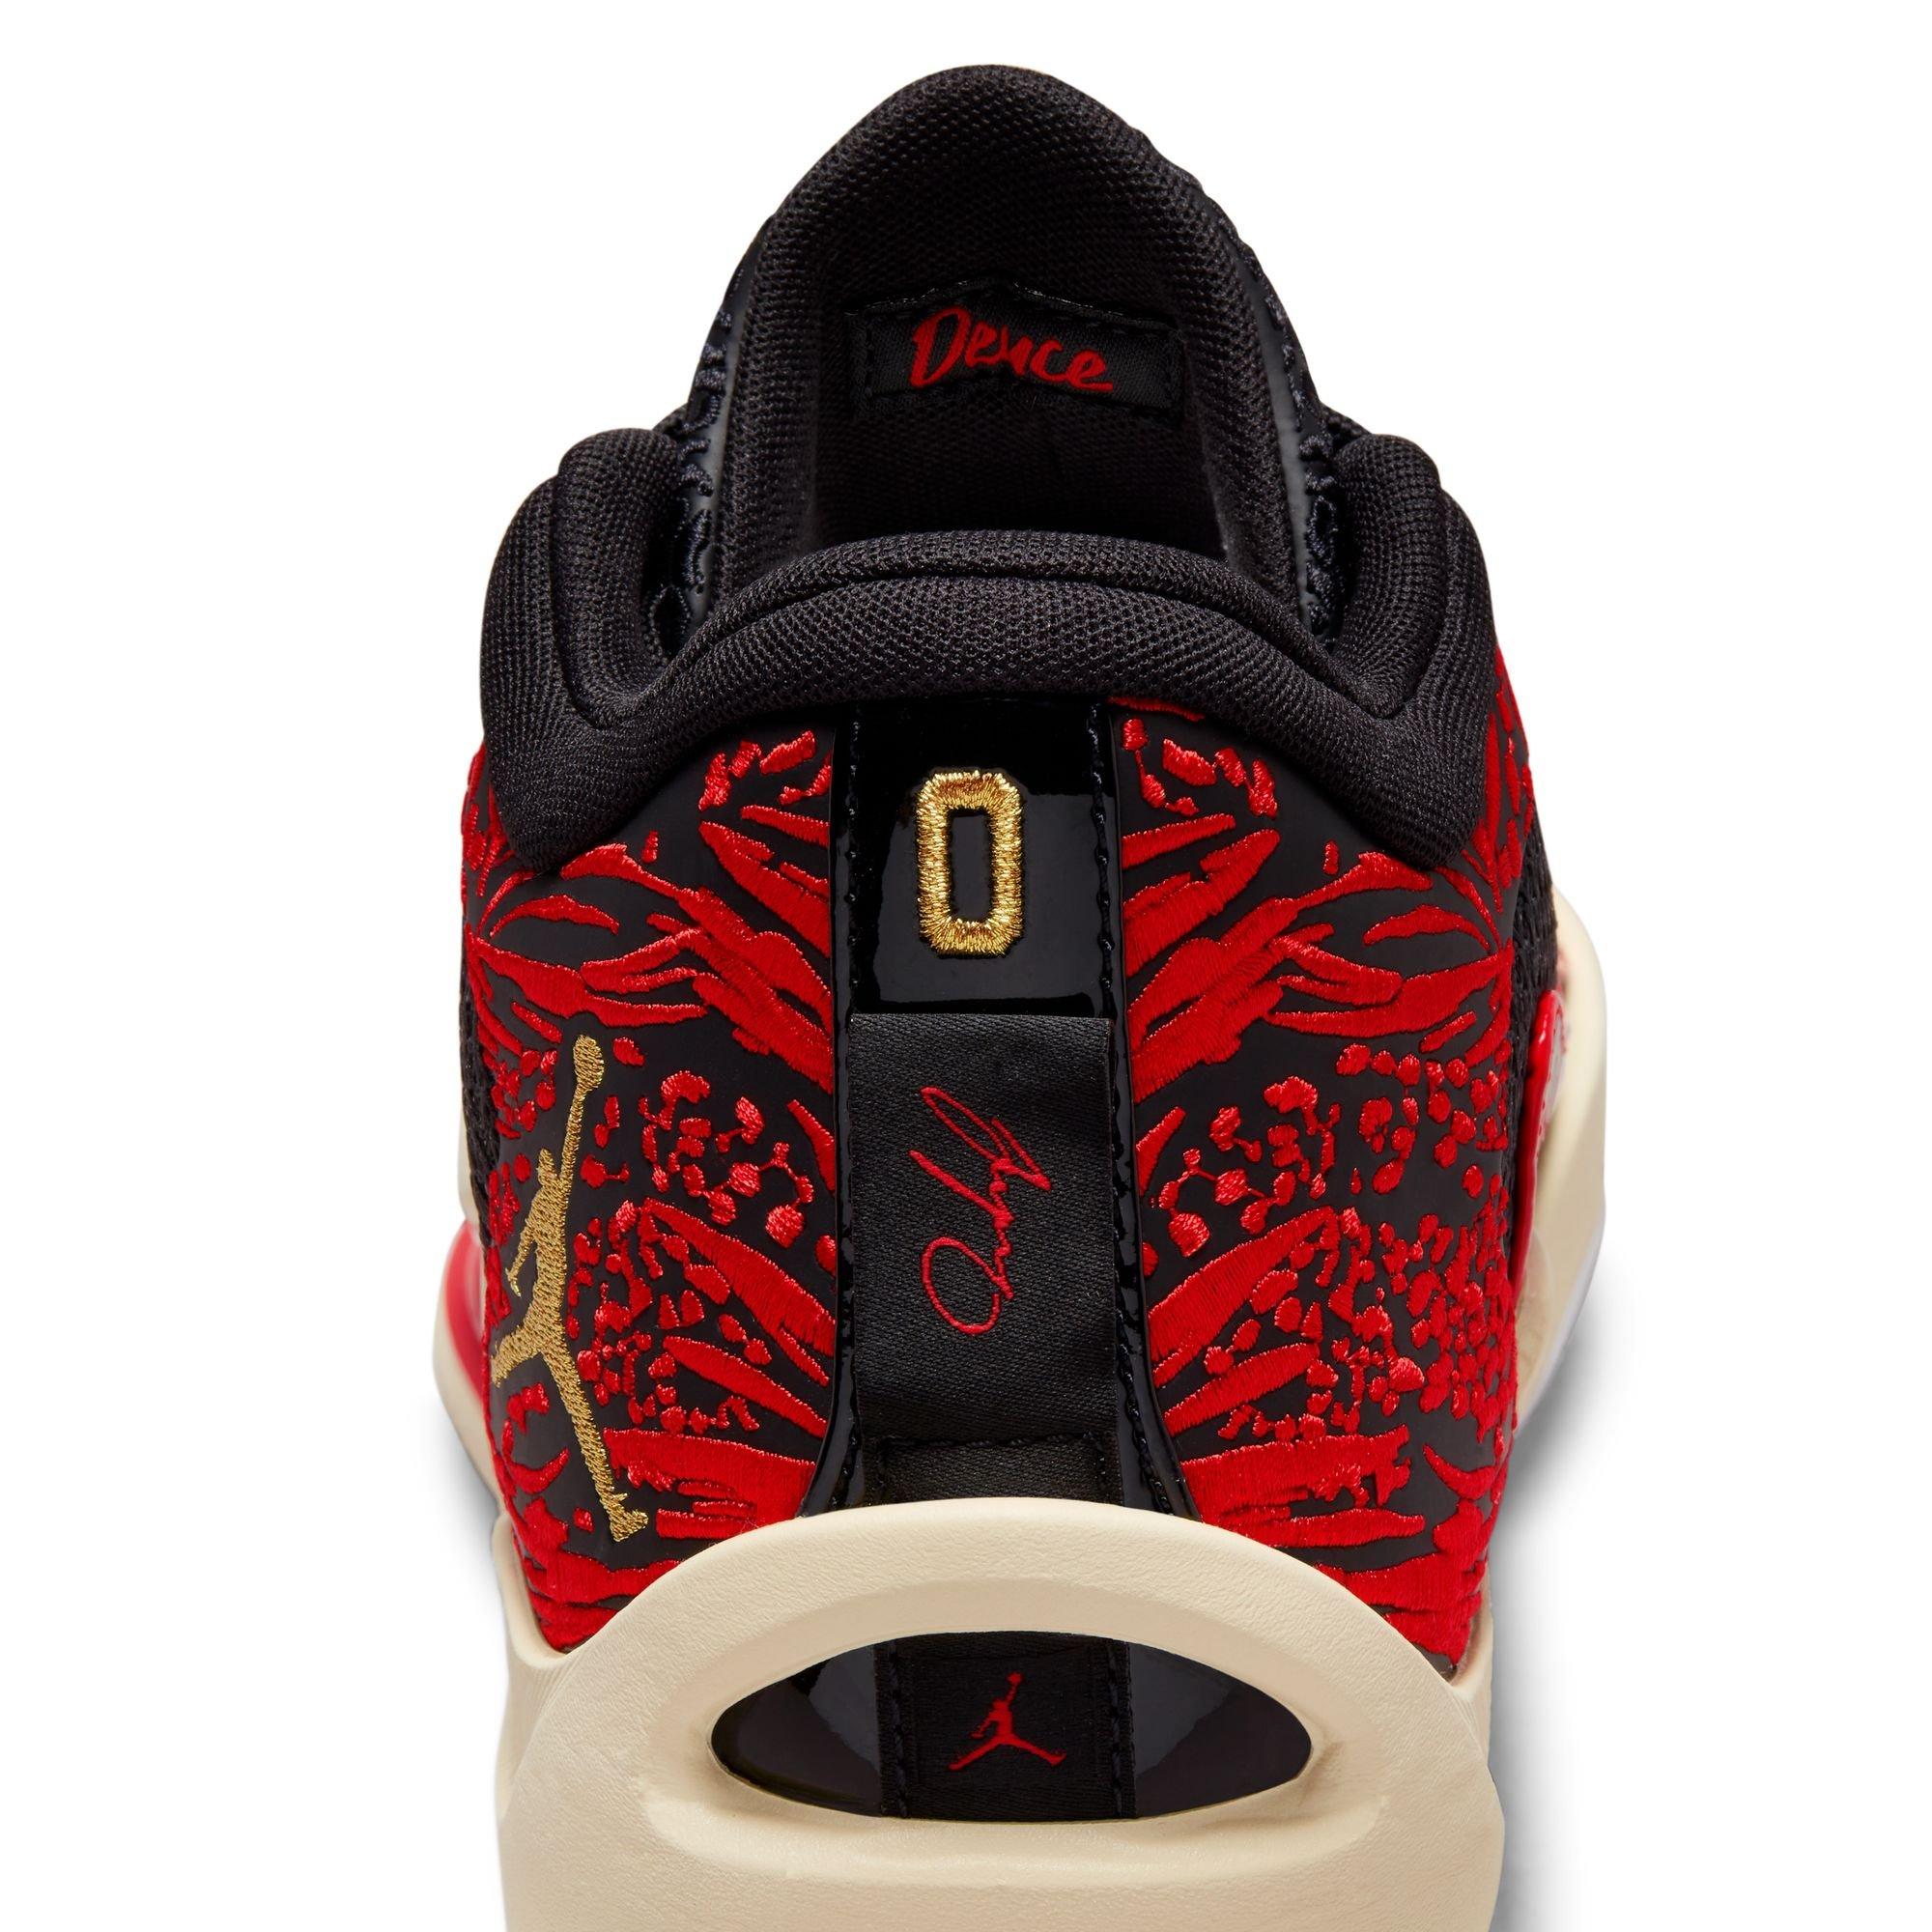 Tatum 1 Zoo PF Basketball Shoes